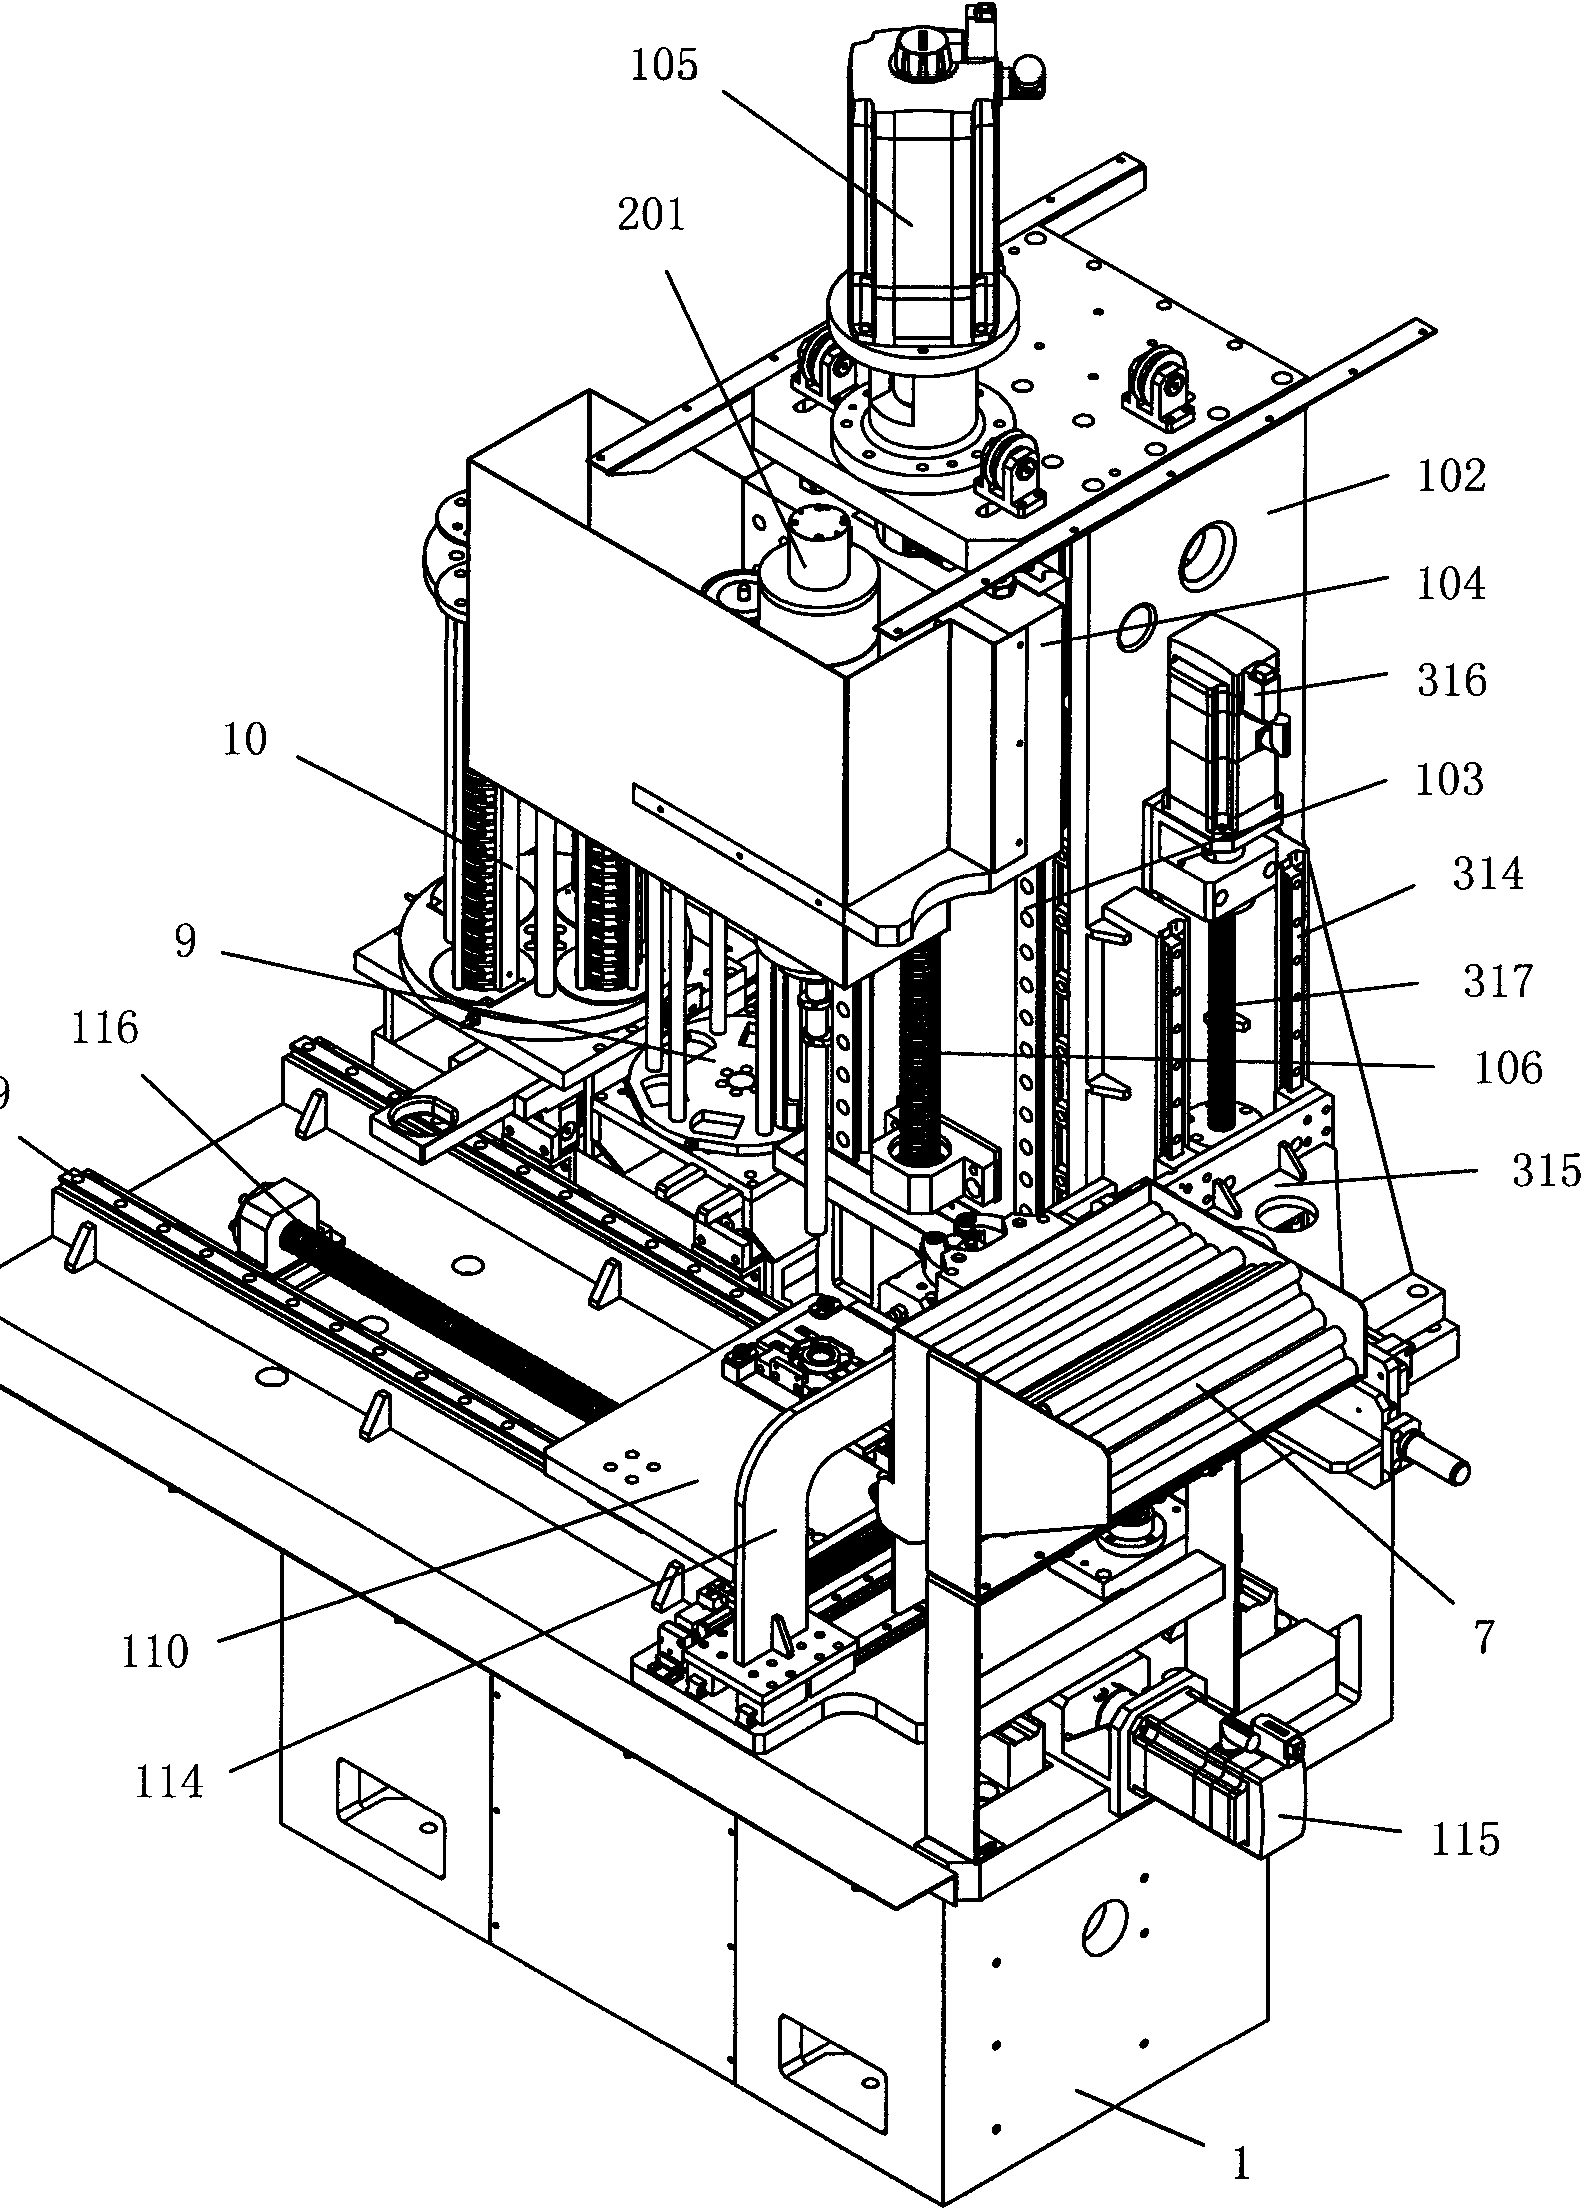 Automatic camshaft assembling machine